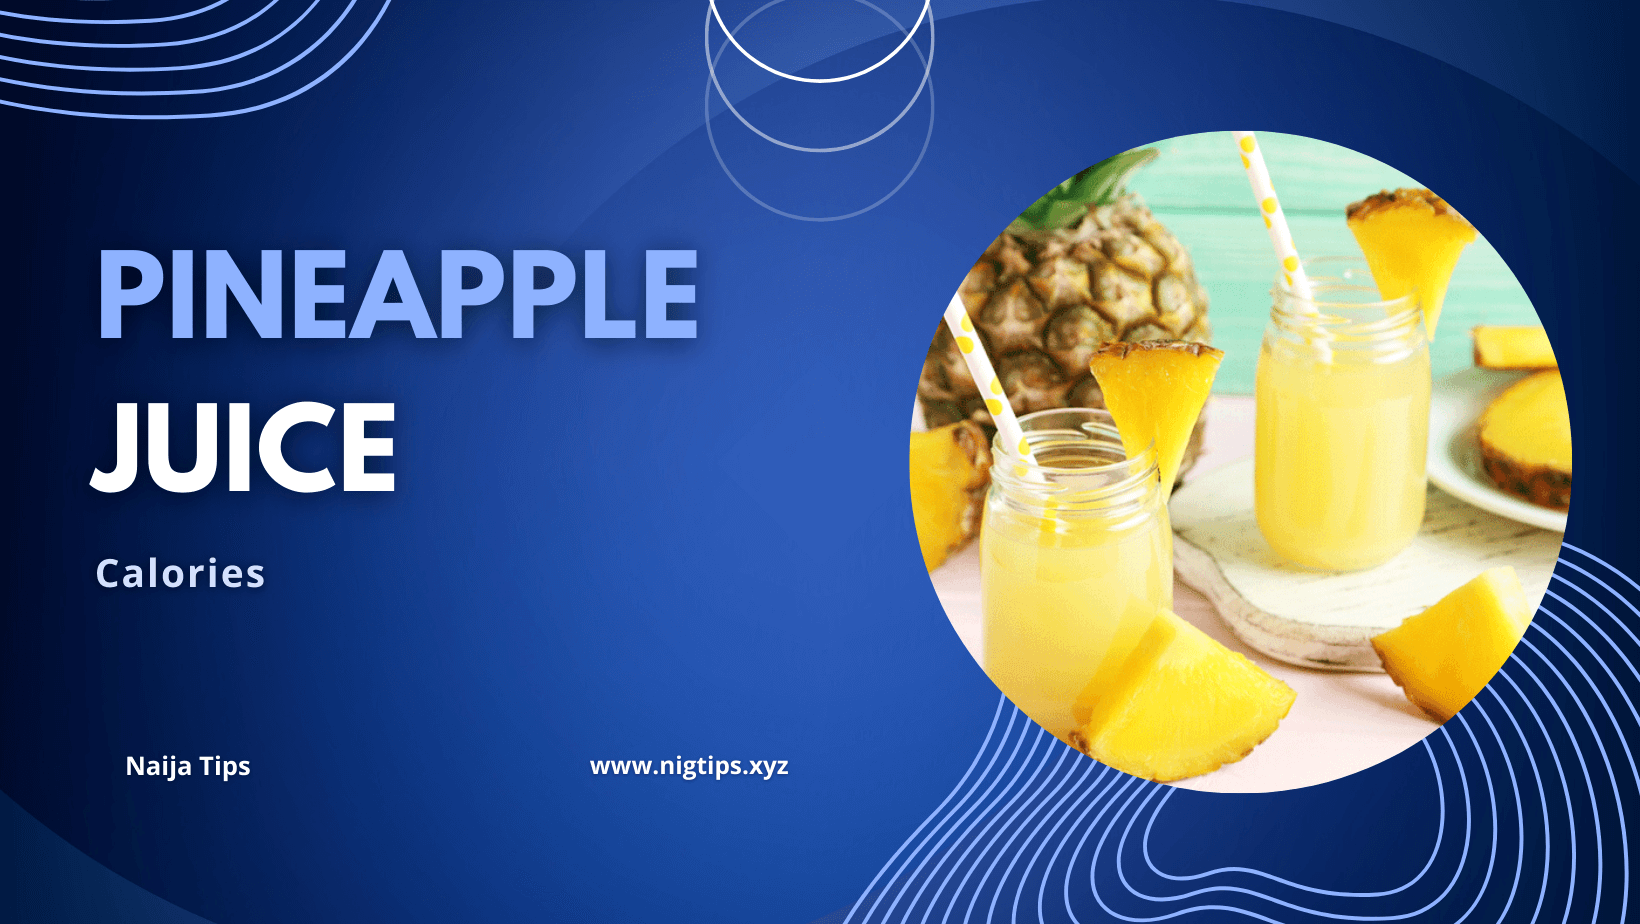 Pineapple Juice Calories